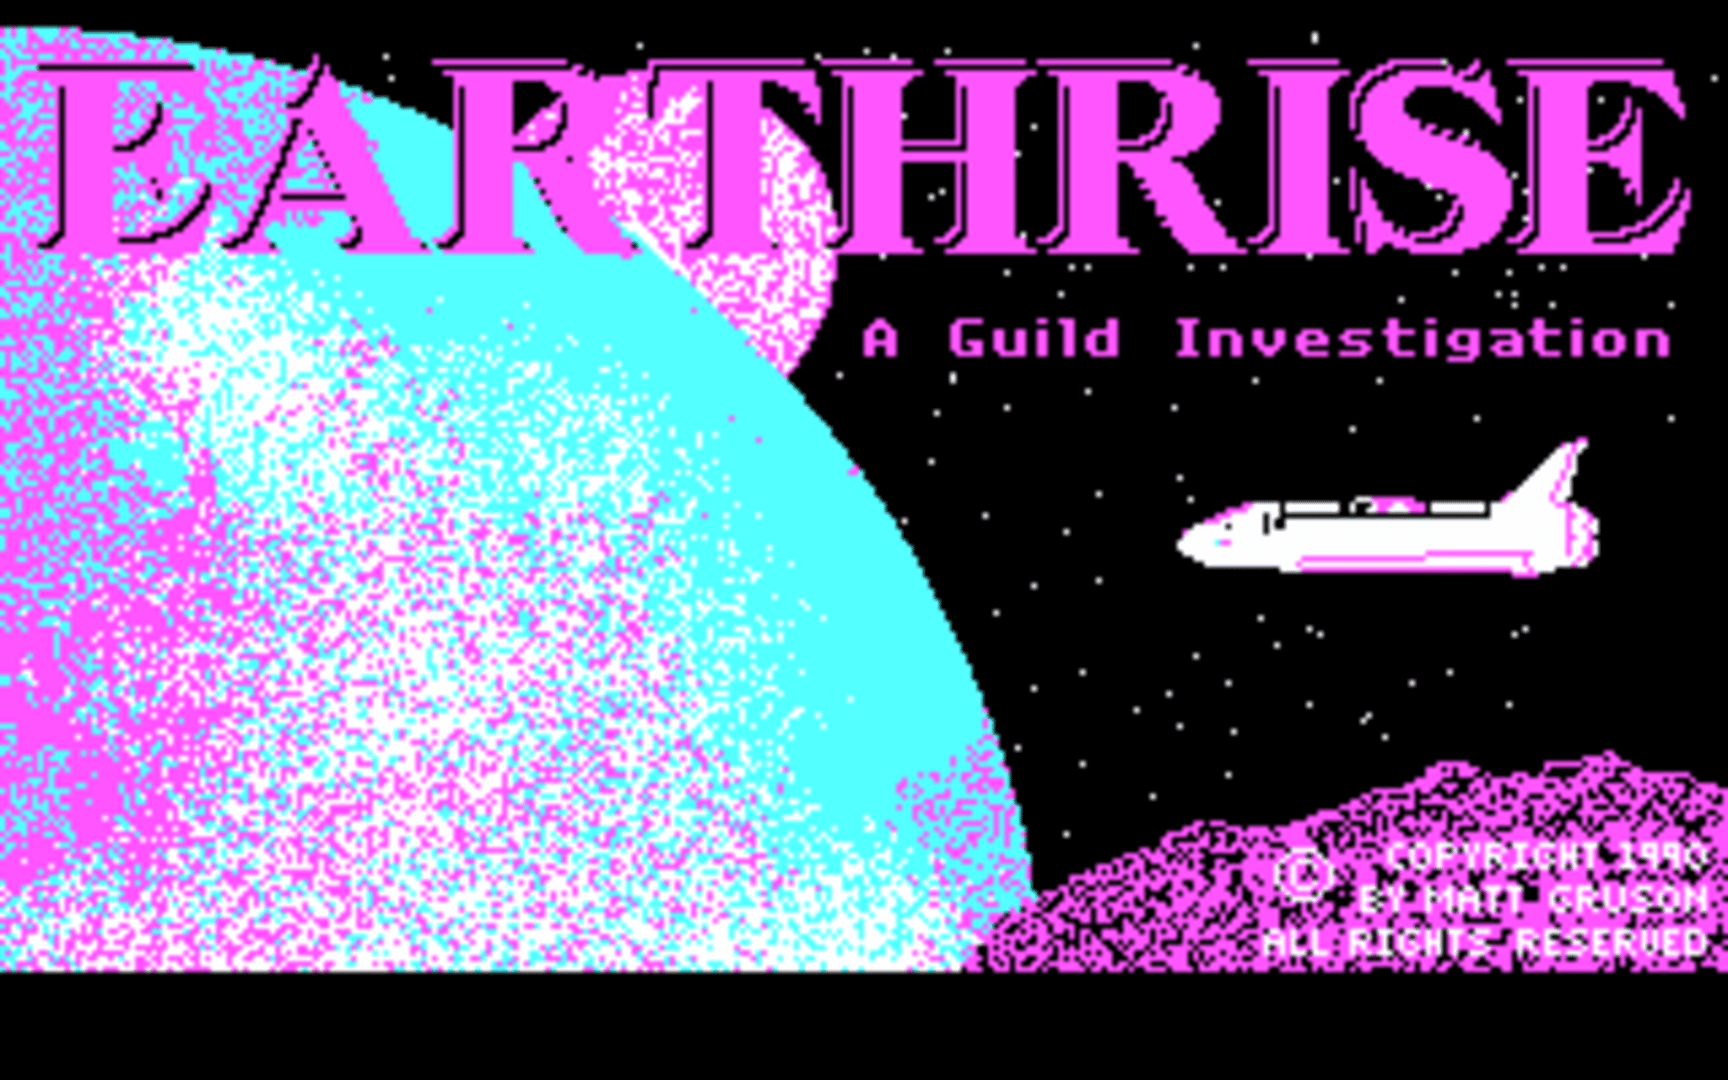 Earthrise: A Guild Investigation screenshot